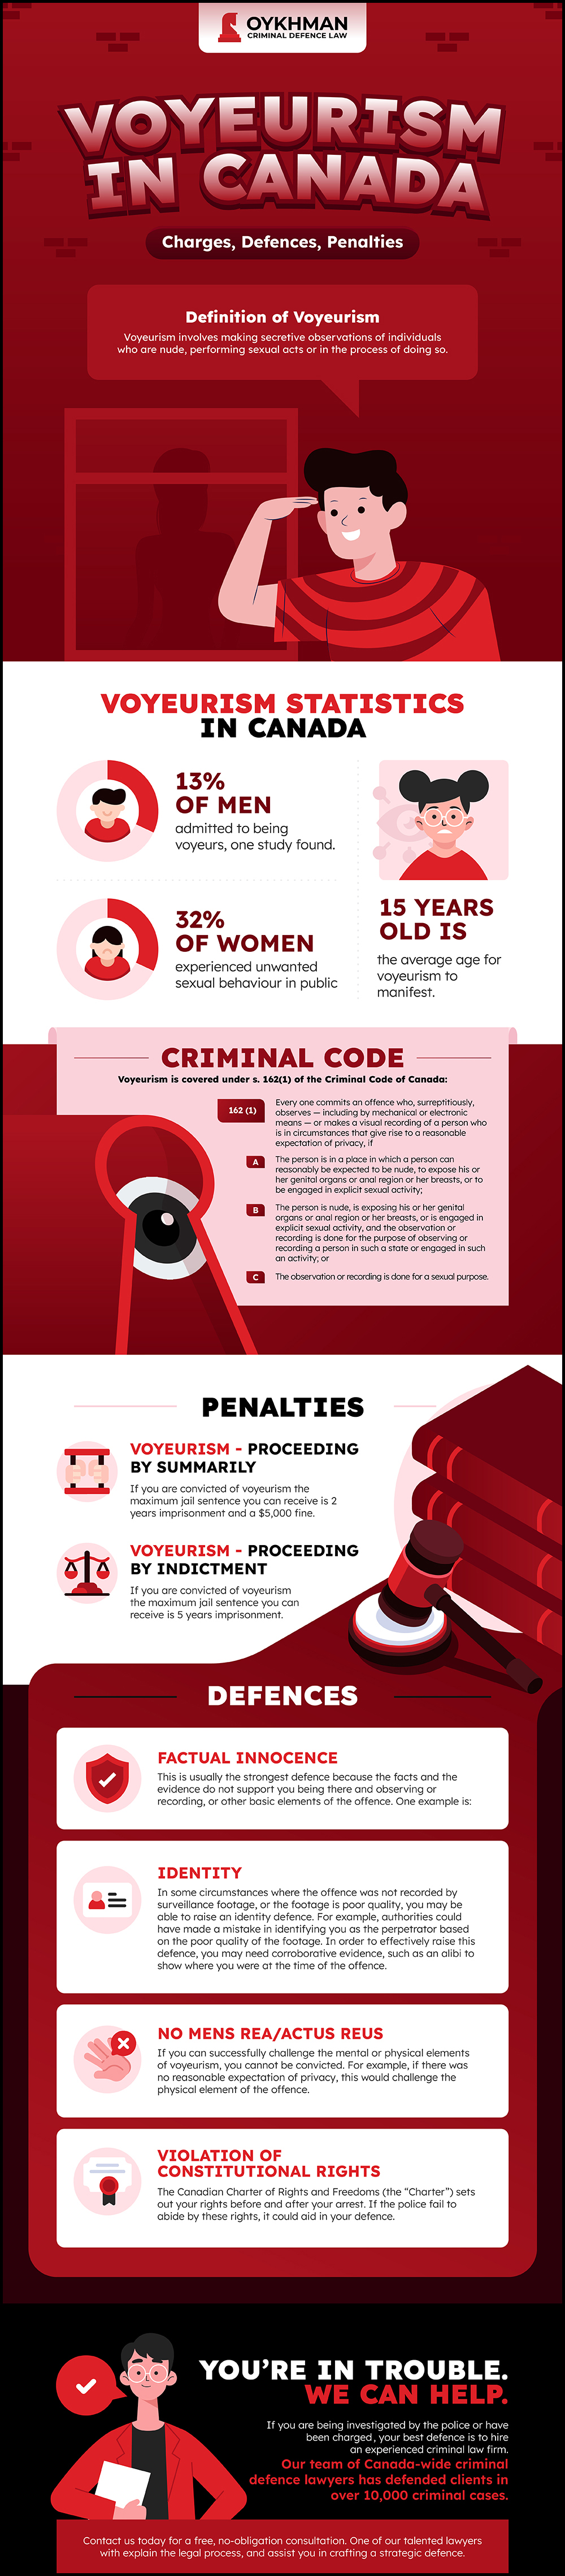 voyeur law canadian criminal code